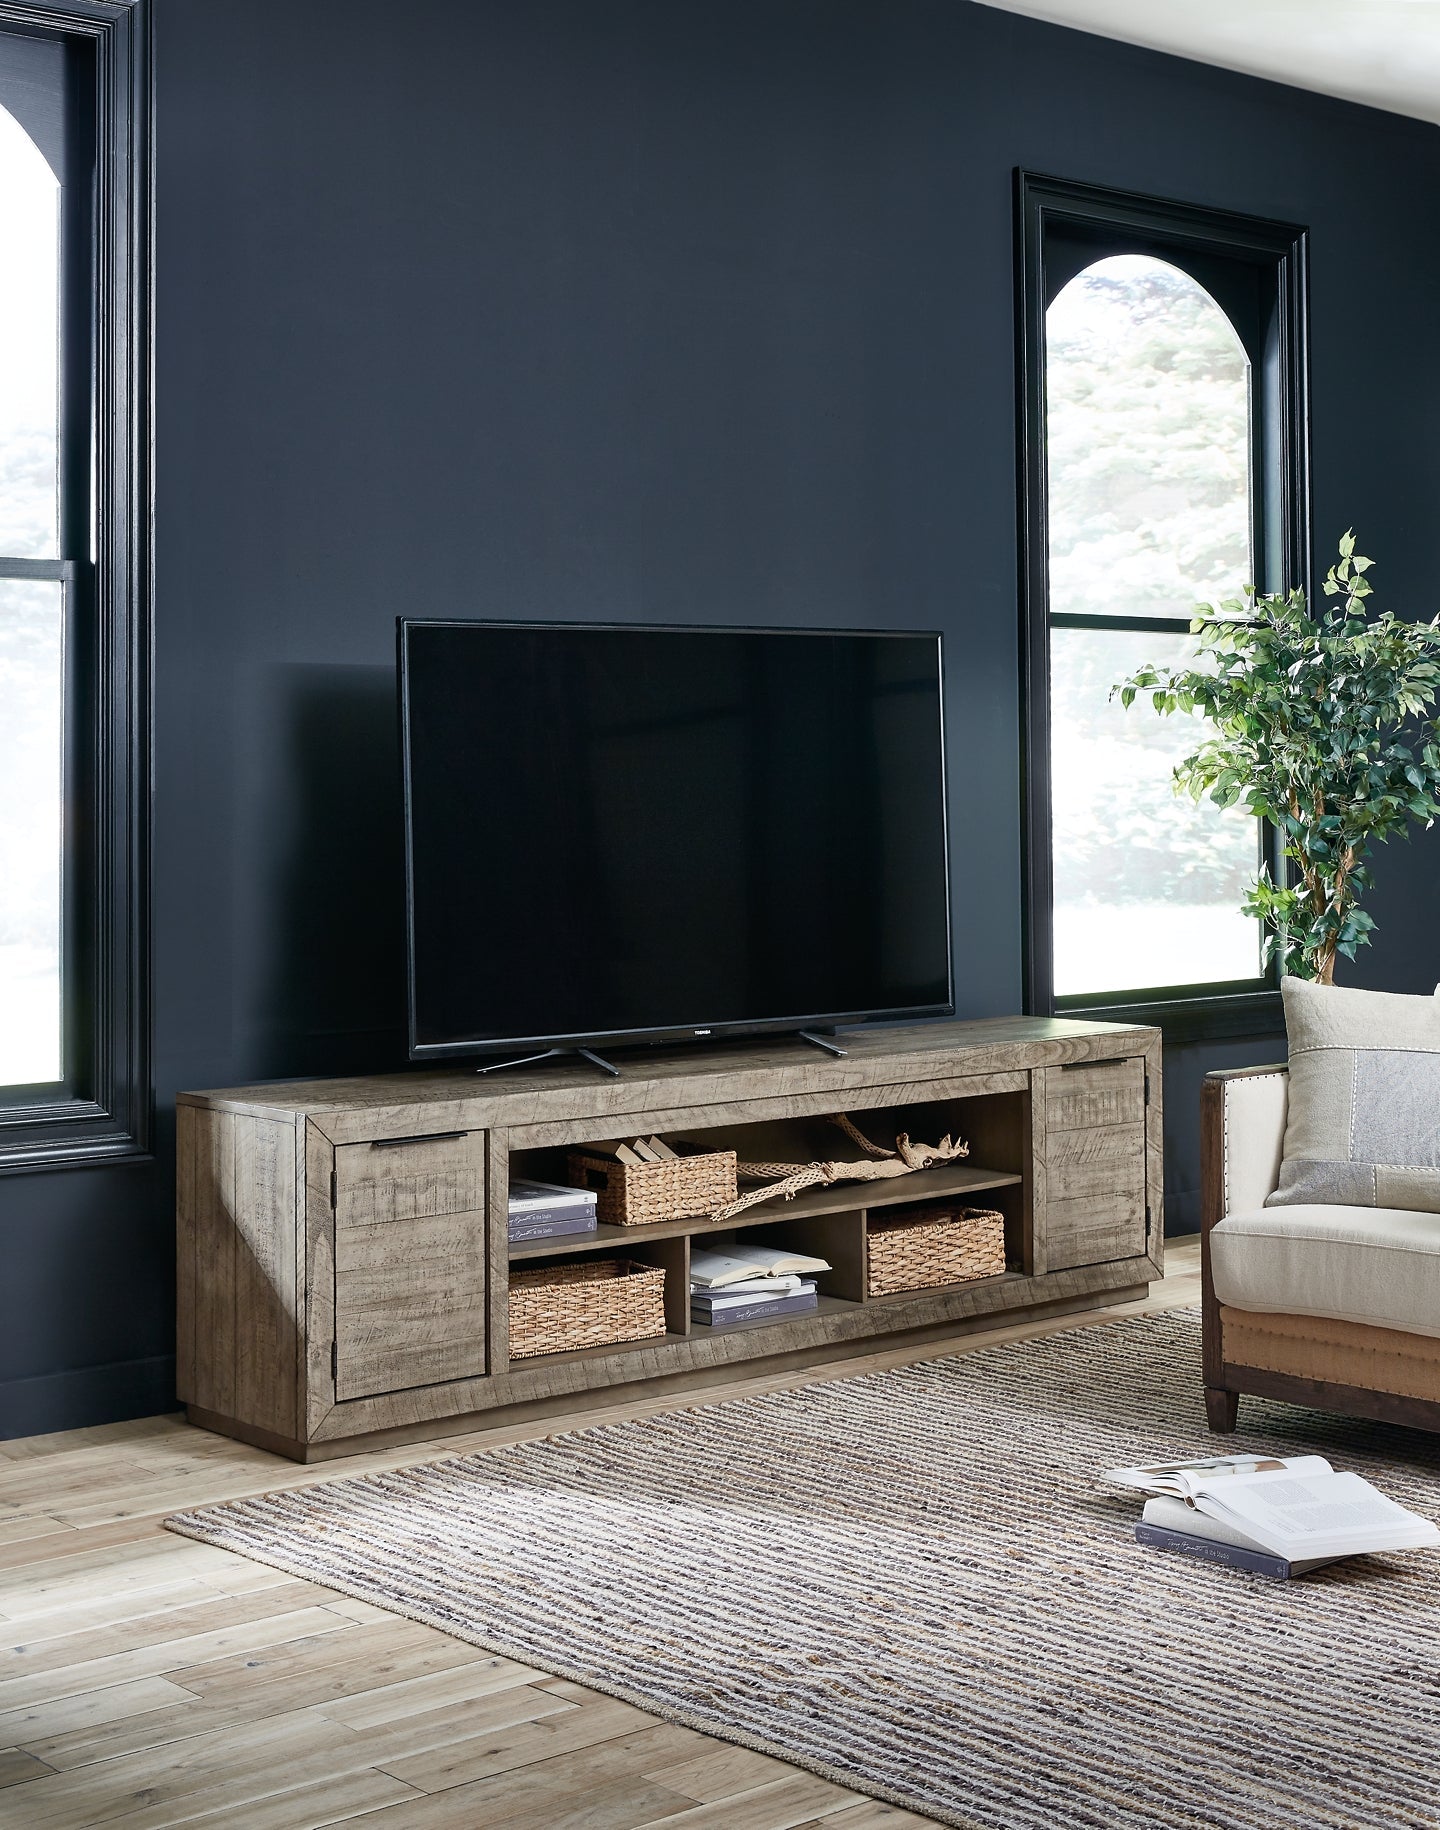 Krystanza XL TV Stand w/Fireplace Option at Cloud 9 Mattress & Furniture furniture, home furnishing, home decor